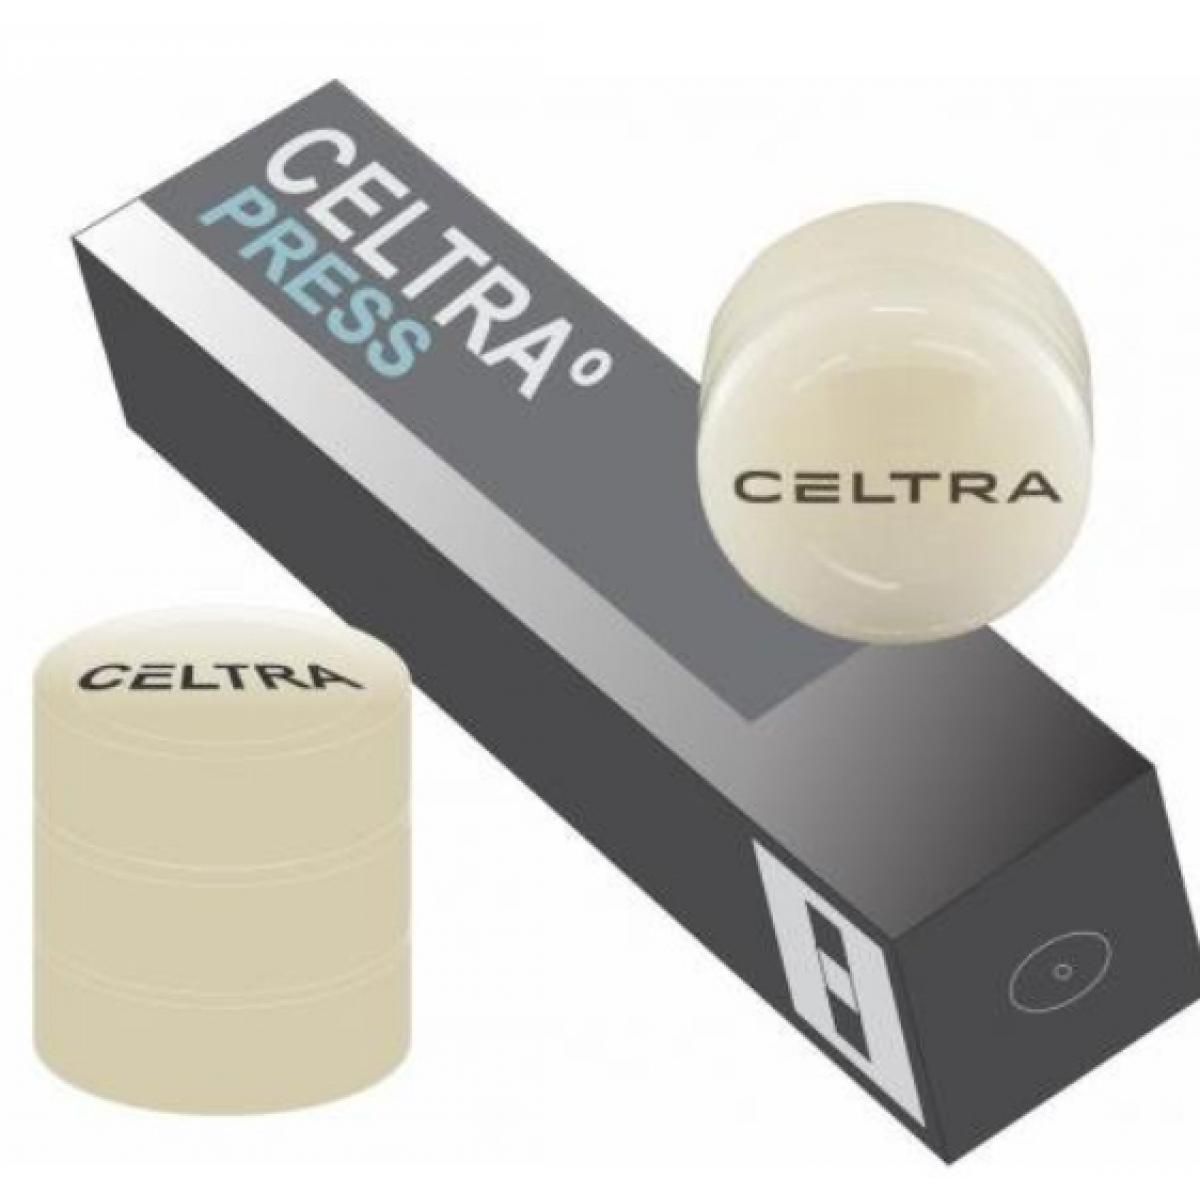 CELTRA PRESS LT C1 5 X 3 GR DENTSPLY -